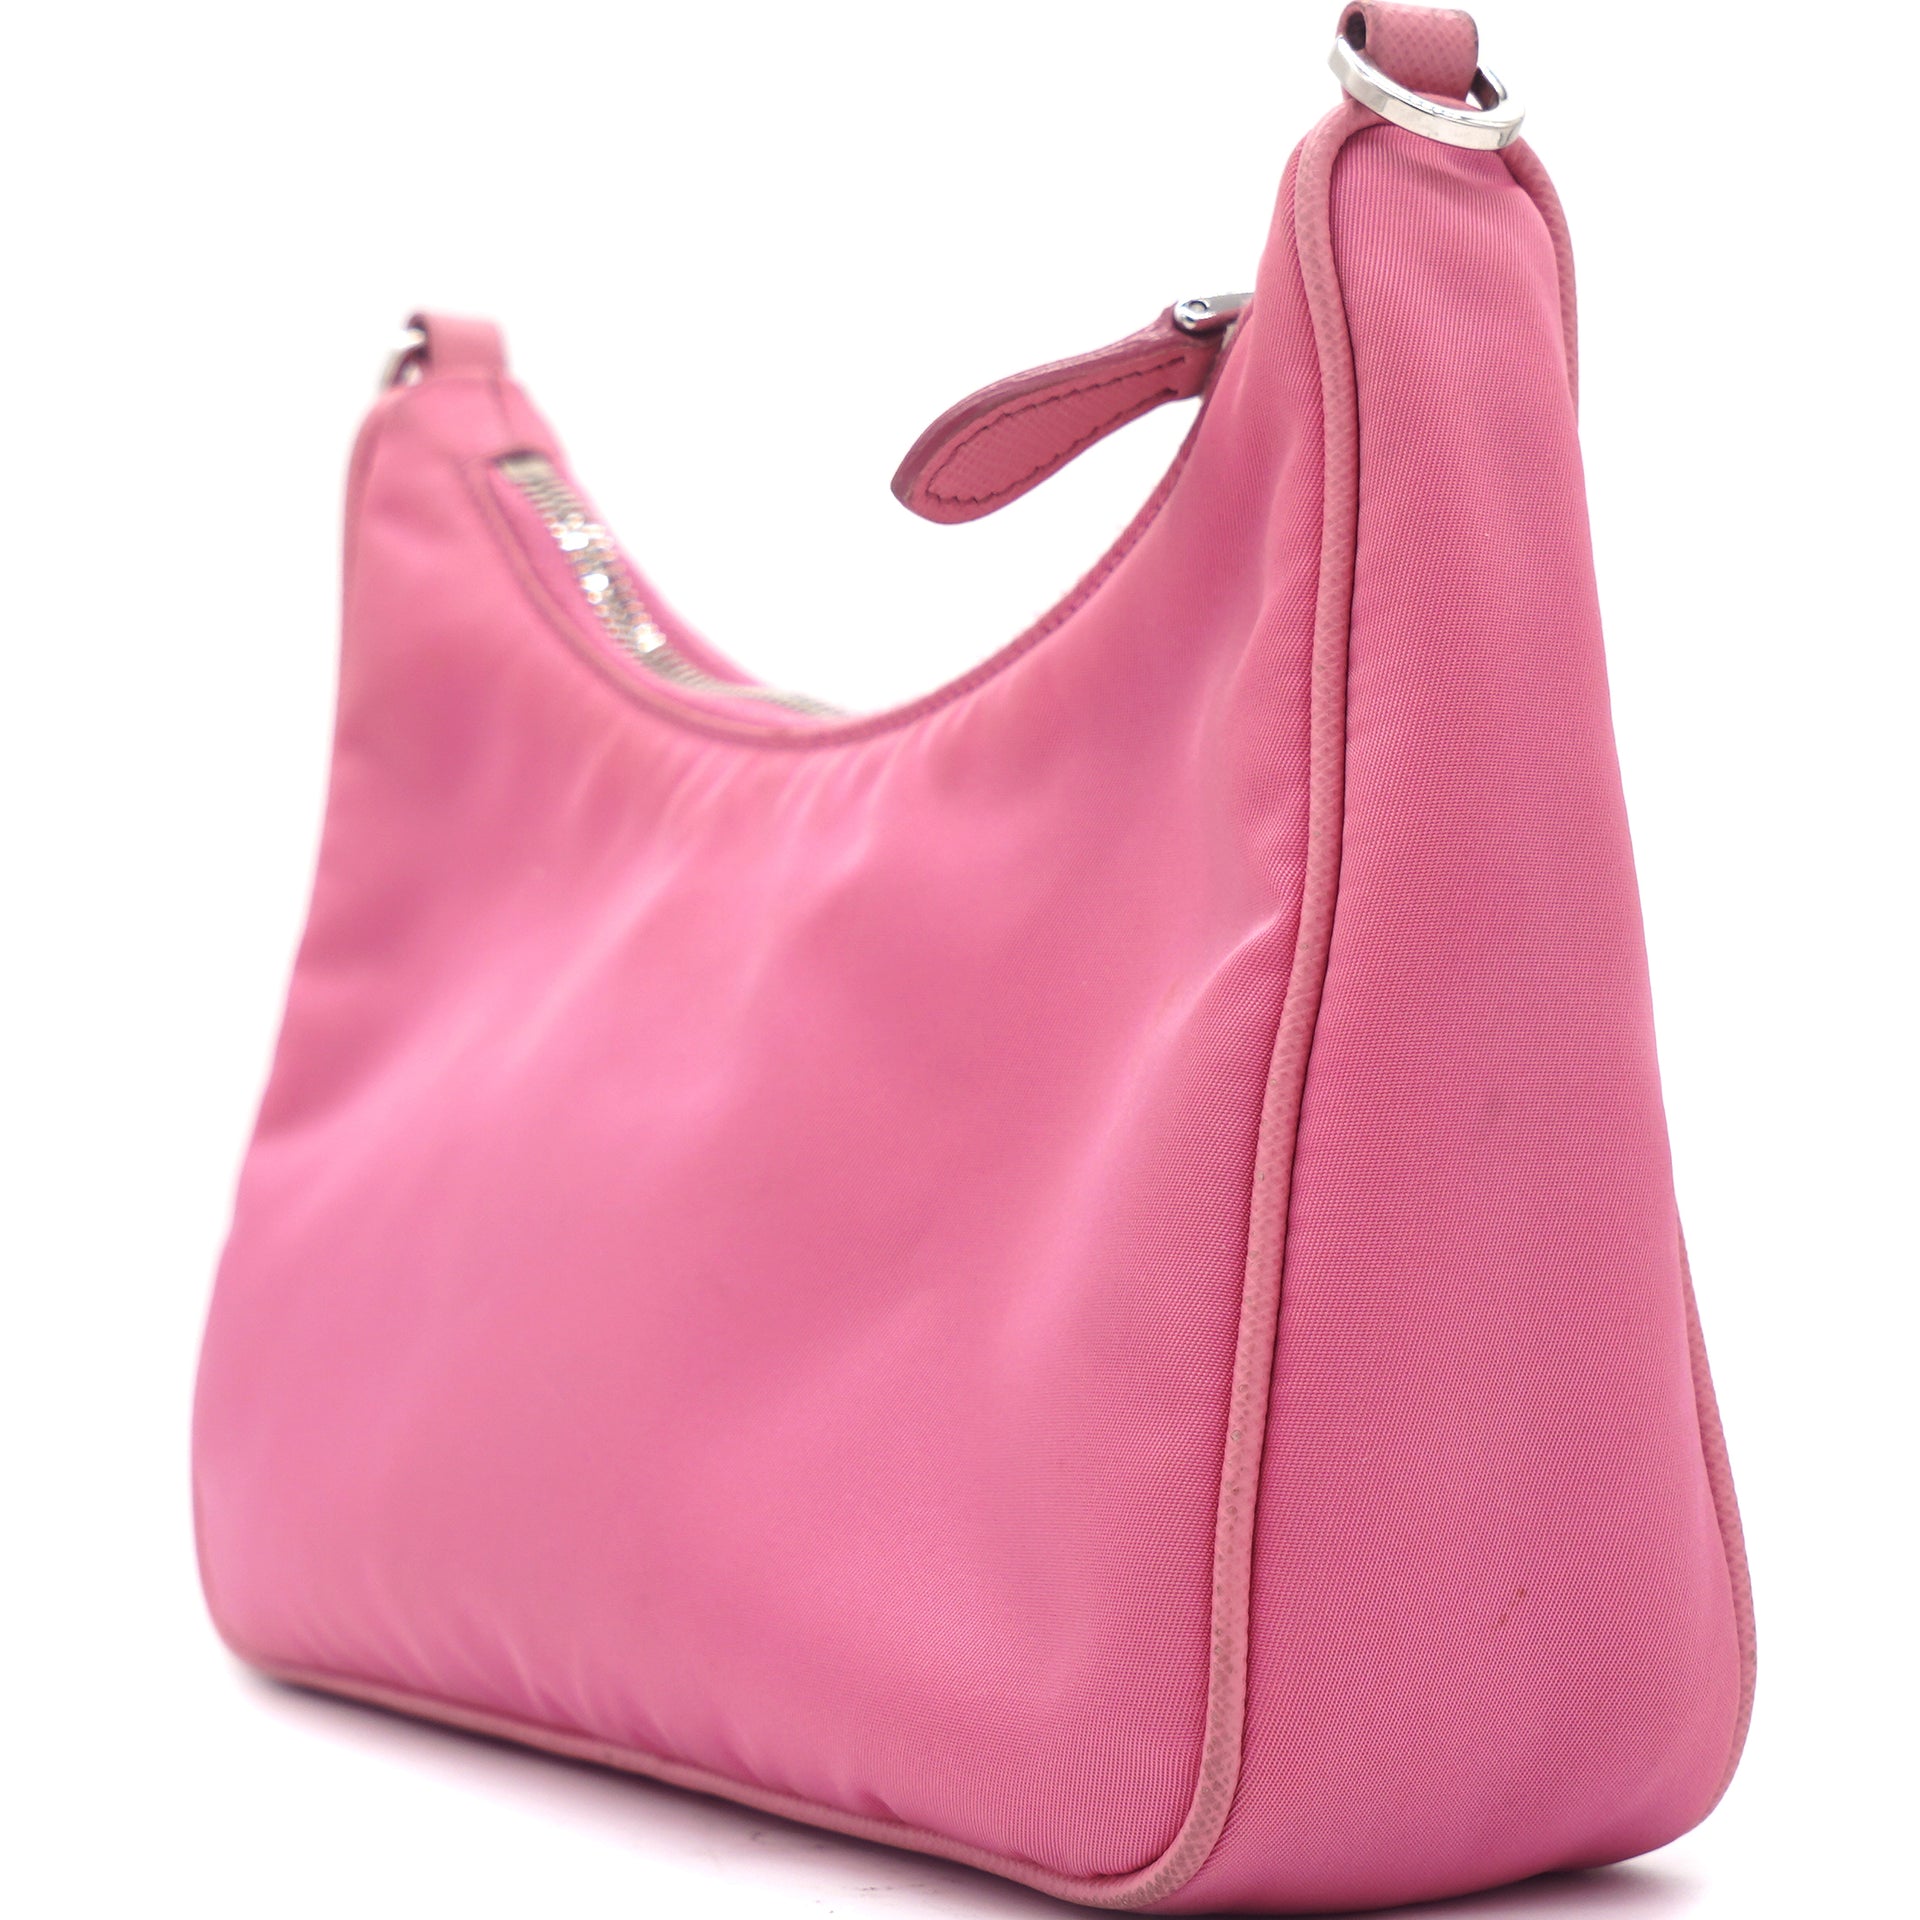 Prada Re-Edition 2005 Shoulder Bag Nylon Begonia Pink in Nylon